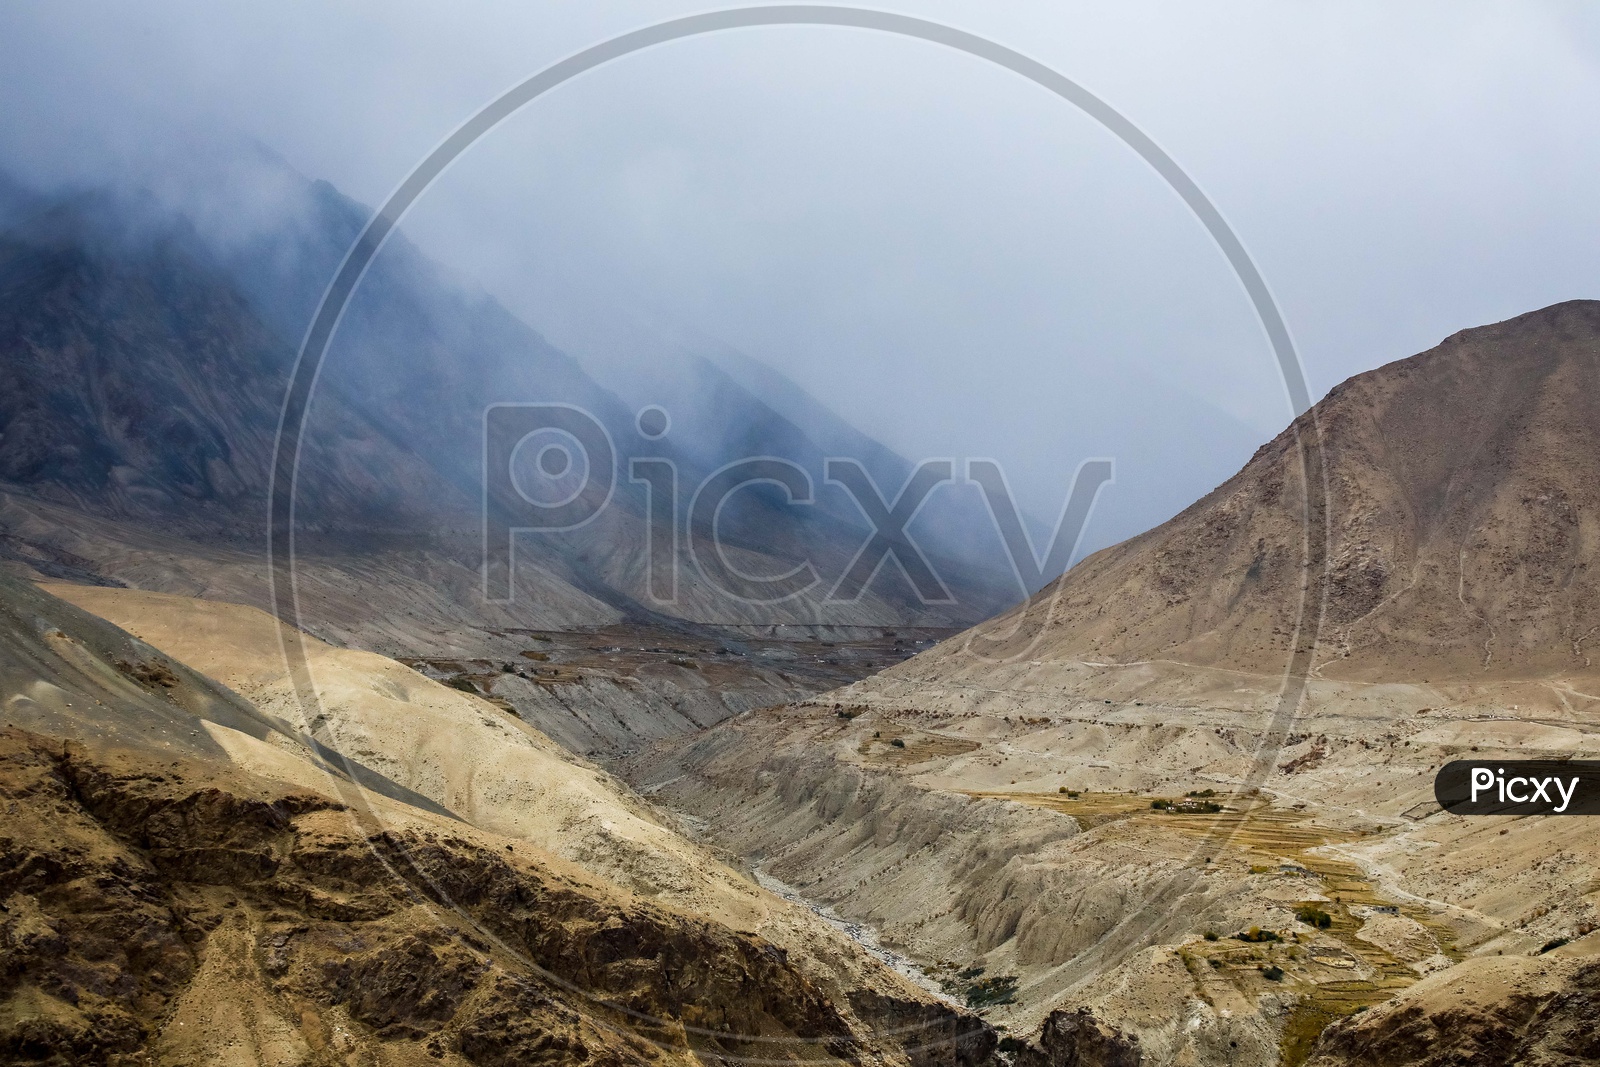 Zanskar river flowing through the misty mountains